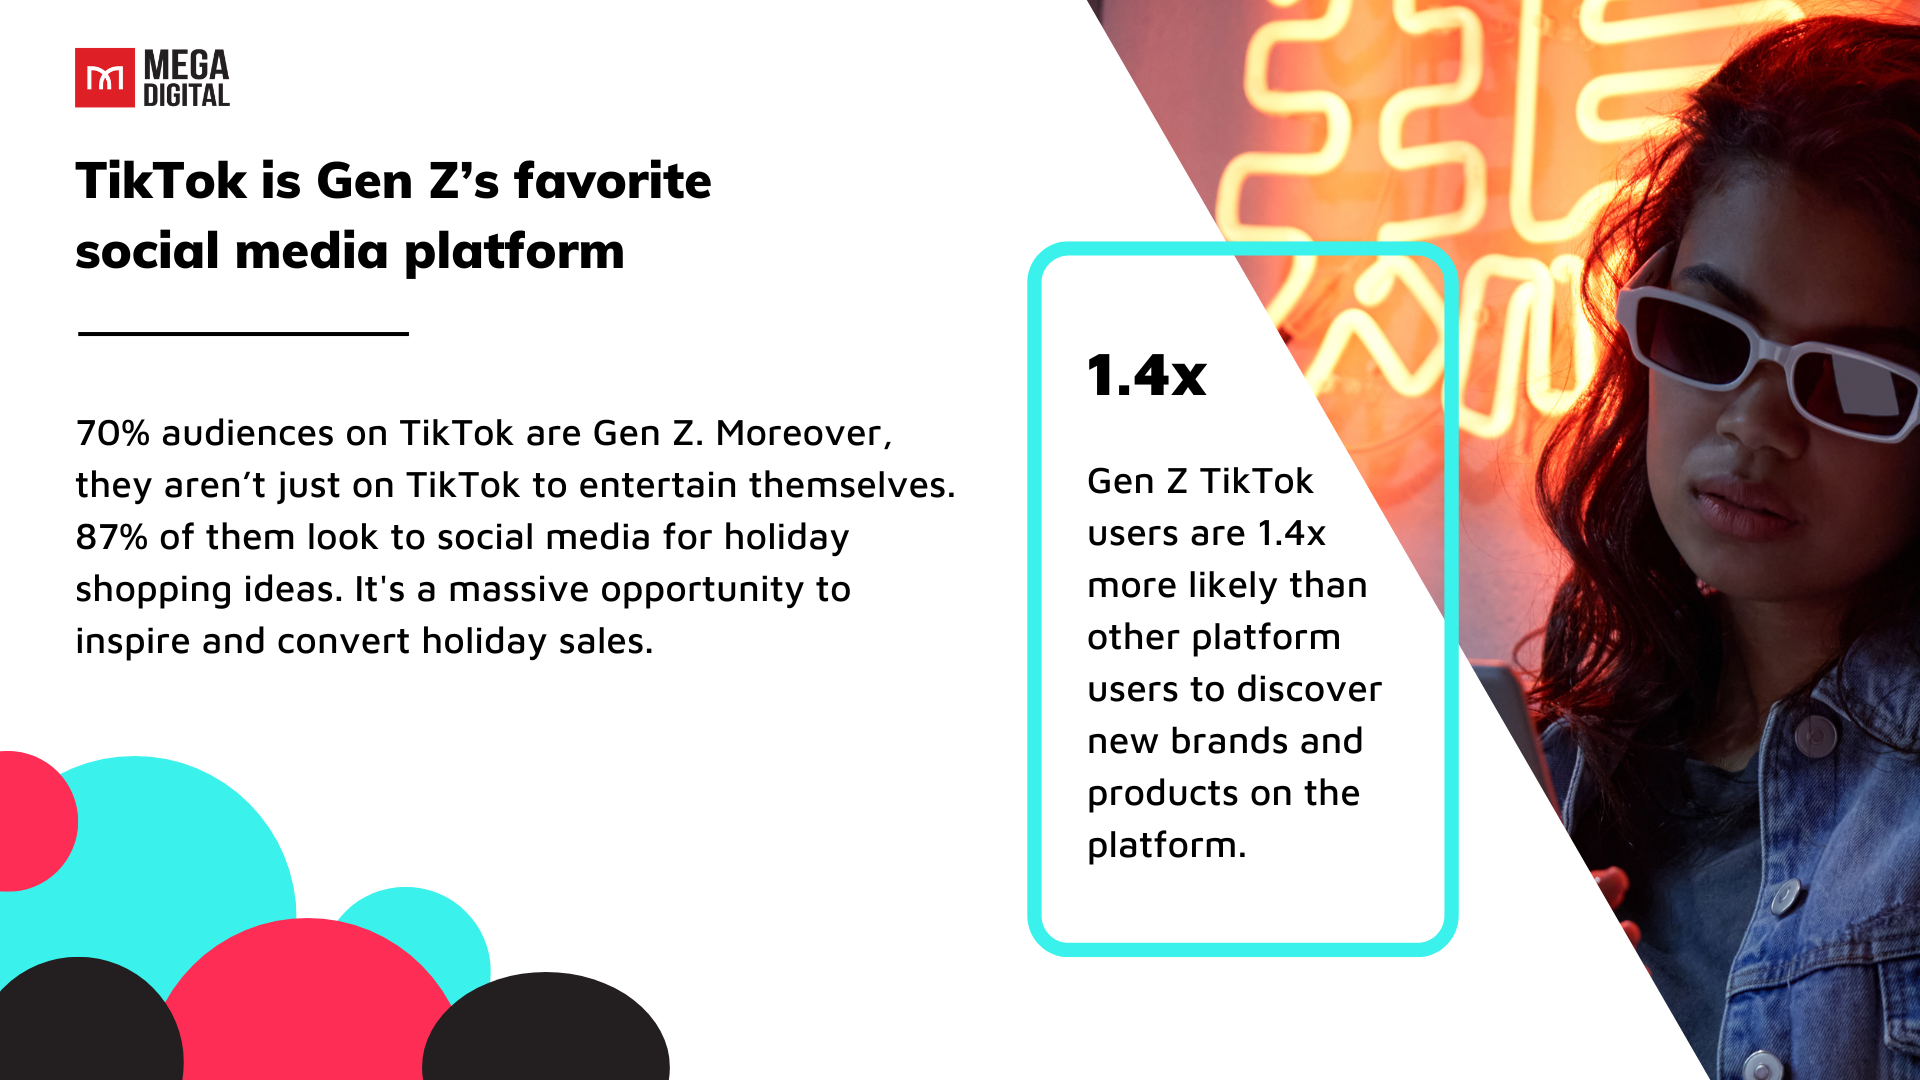 TikTok is Gen Z's favorite social media platform